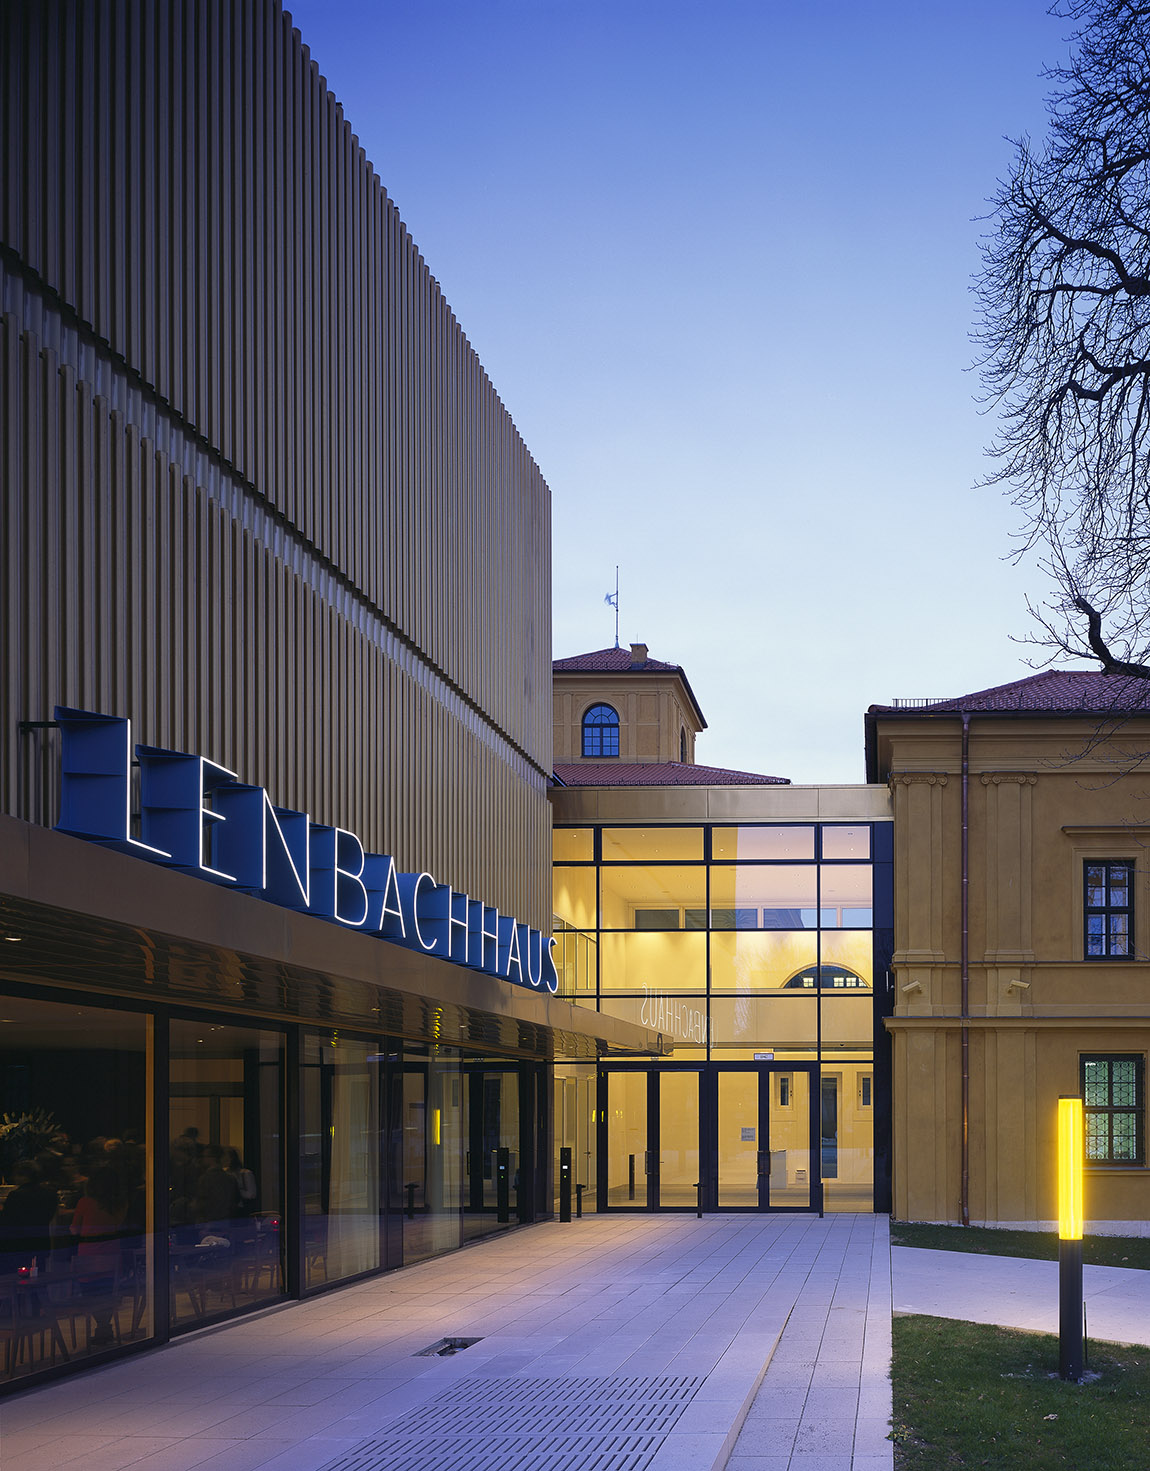 The Lenbachhaus: A jewel of contemporary art